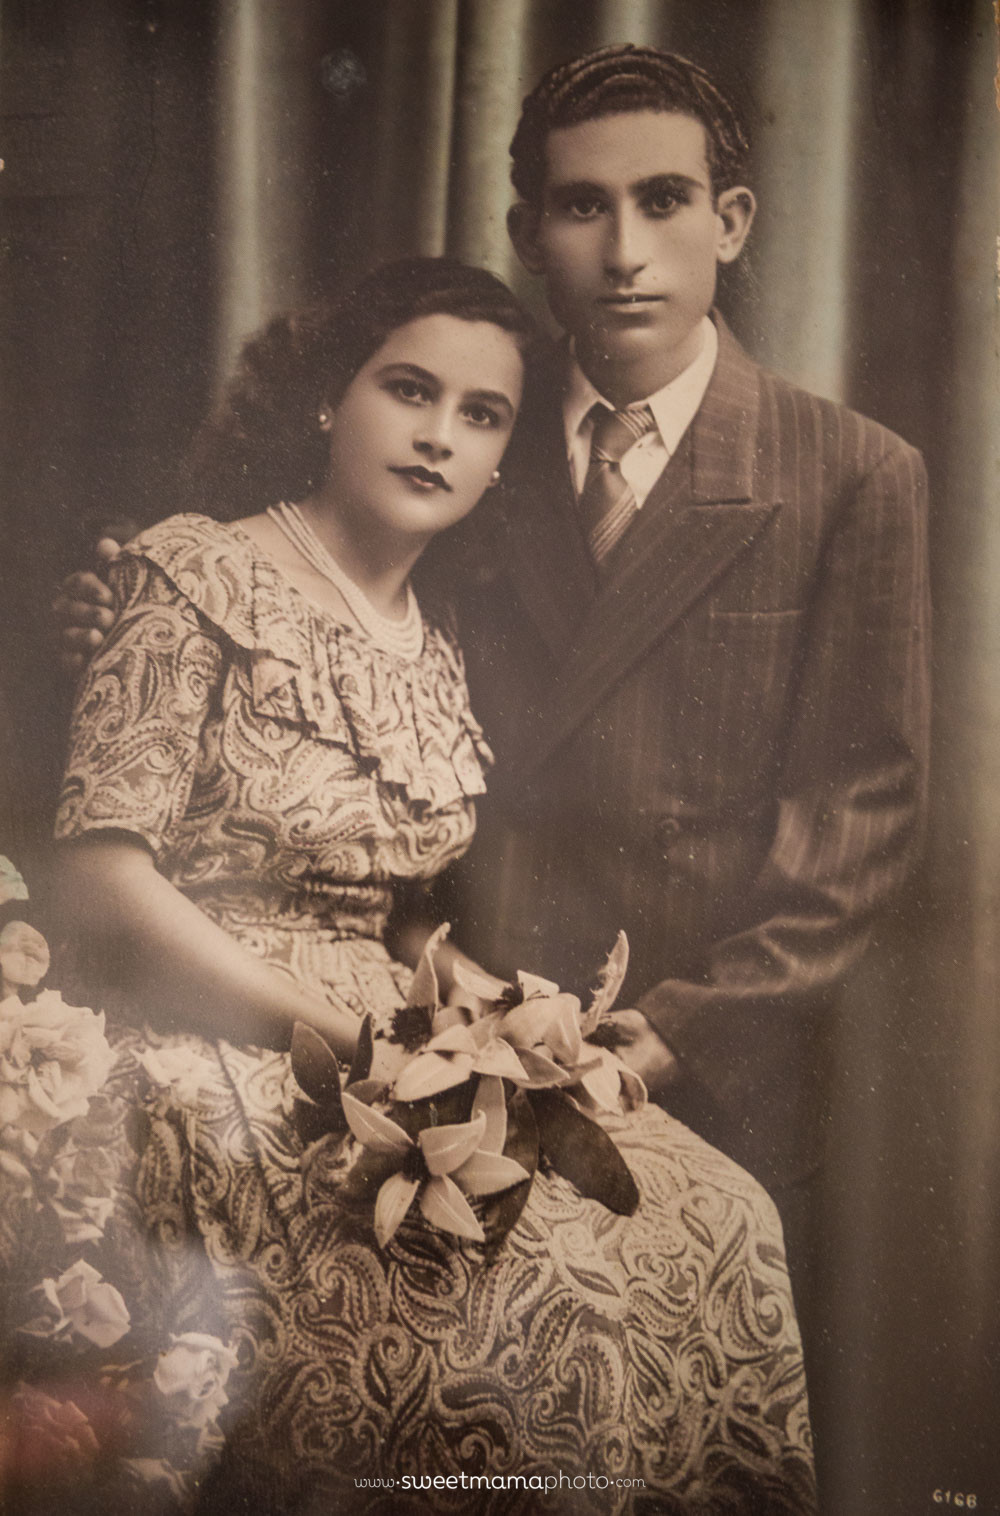 Closeup of my grand-parents' engagement photo